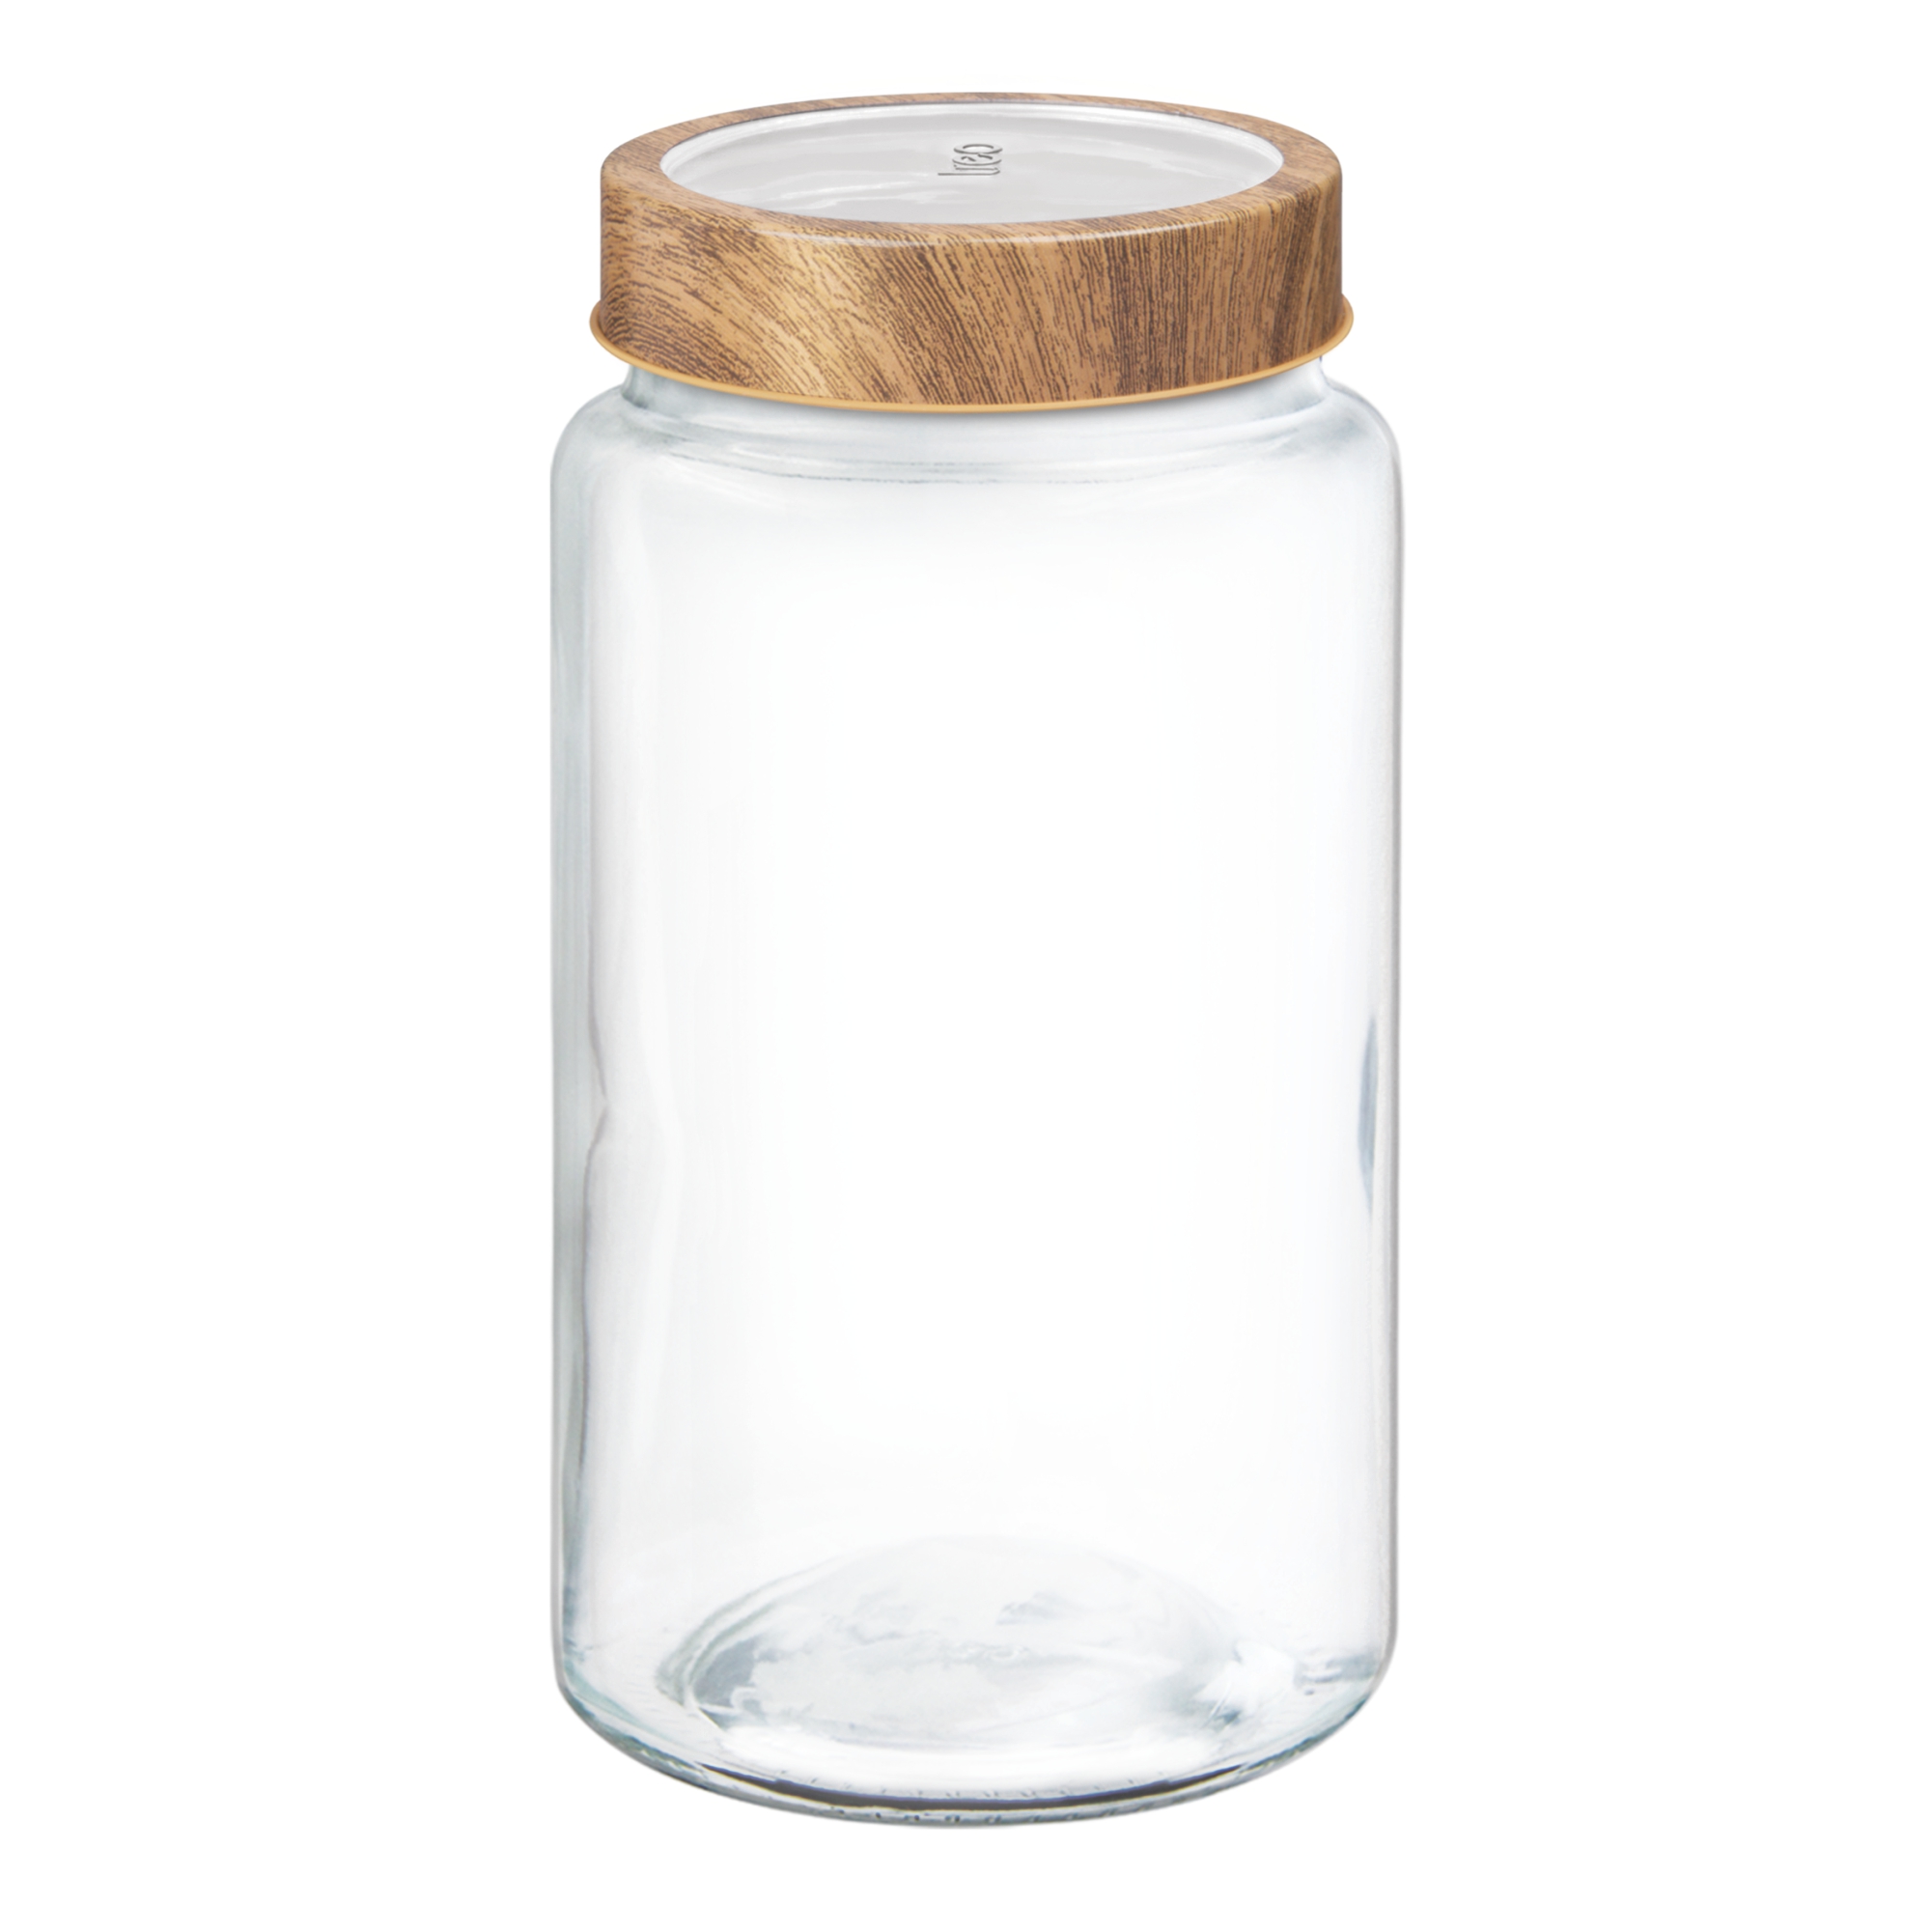 Treo Woody Radius Glass Jar